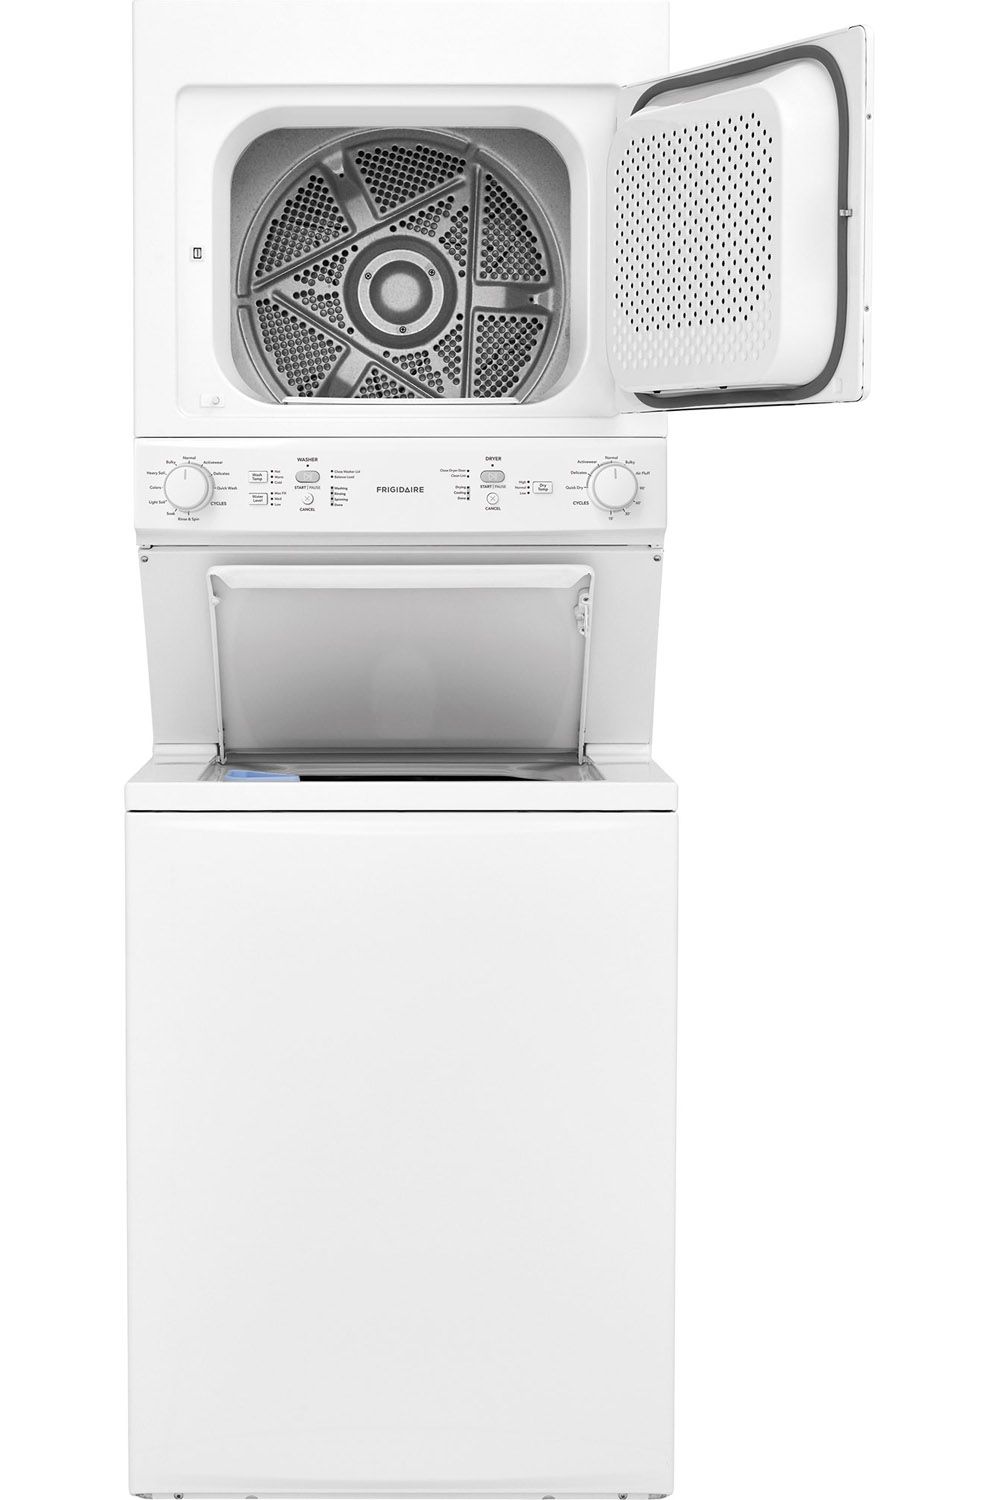 Frigidaire Laundry Center 3.9 cu ft washer/5.5 cu ft dryer | Frigidaire